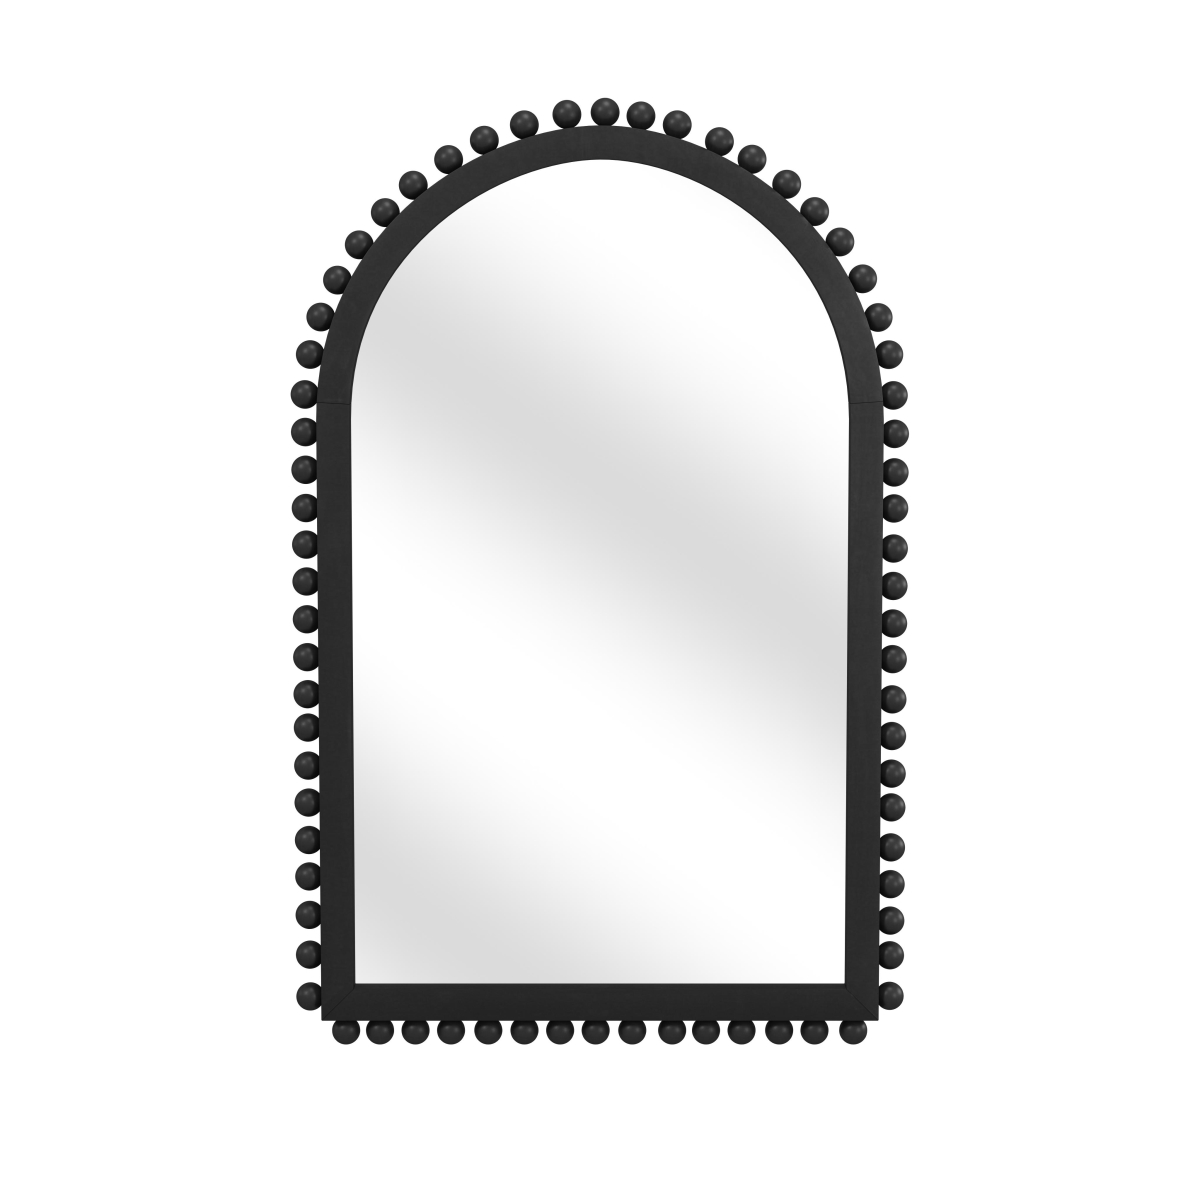 Picture of Bassett Mirror M4872 Renn Wall Mirror - Black